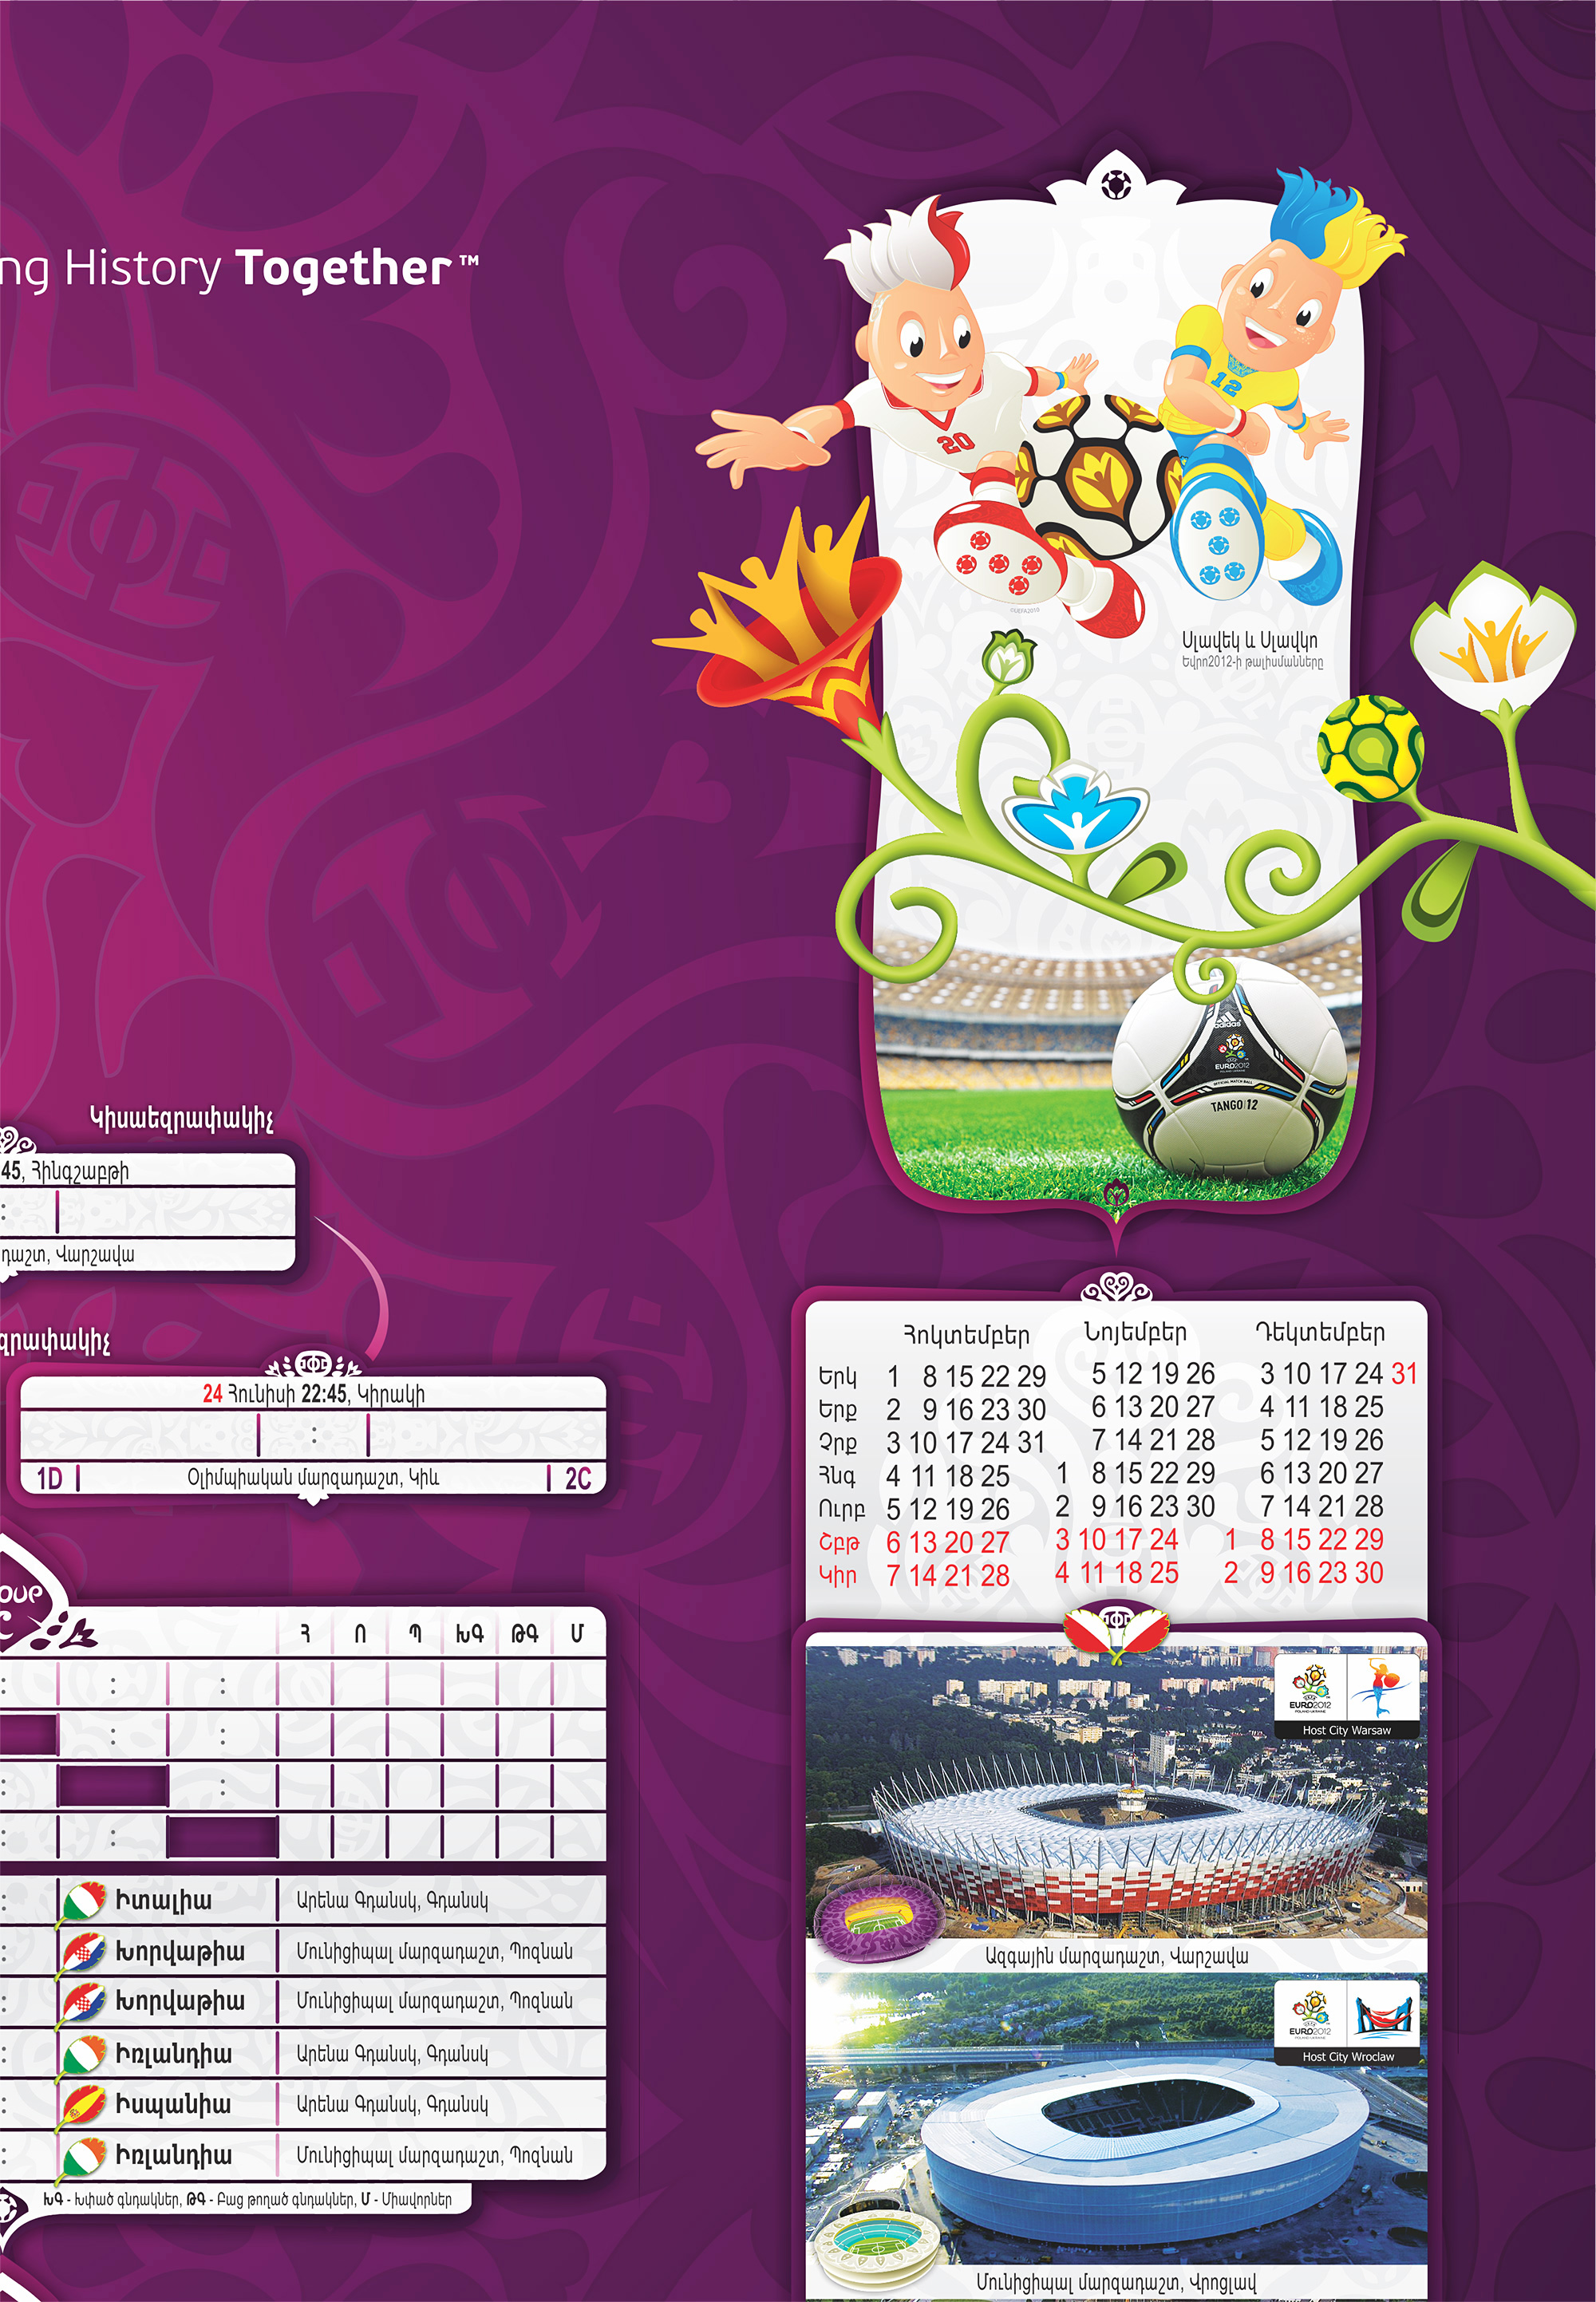 EURO2012 Wallchart-UEFA EURO2012 Poland-Ukraine Poster Design